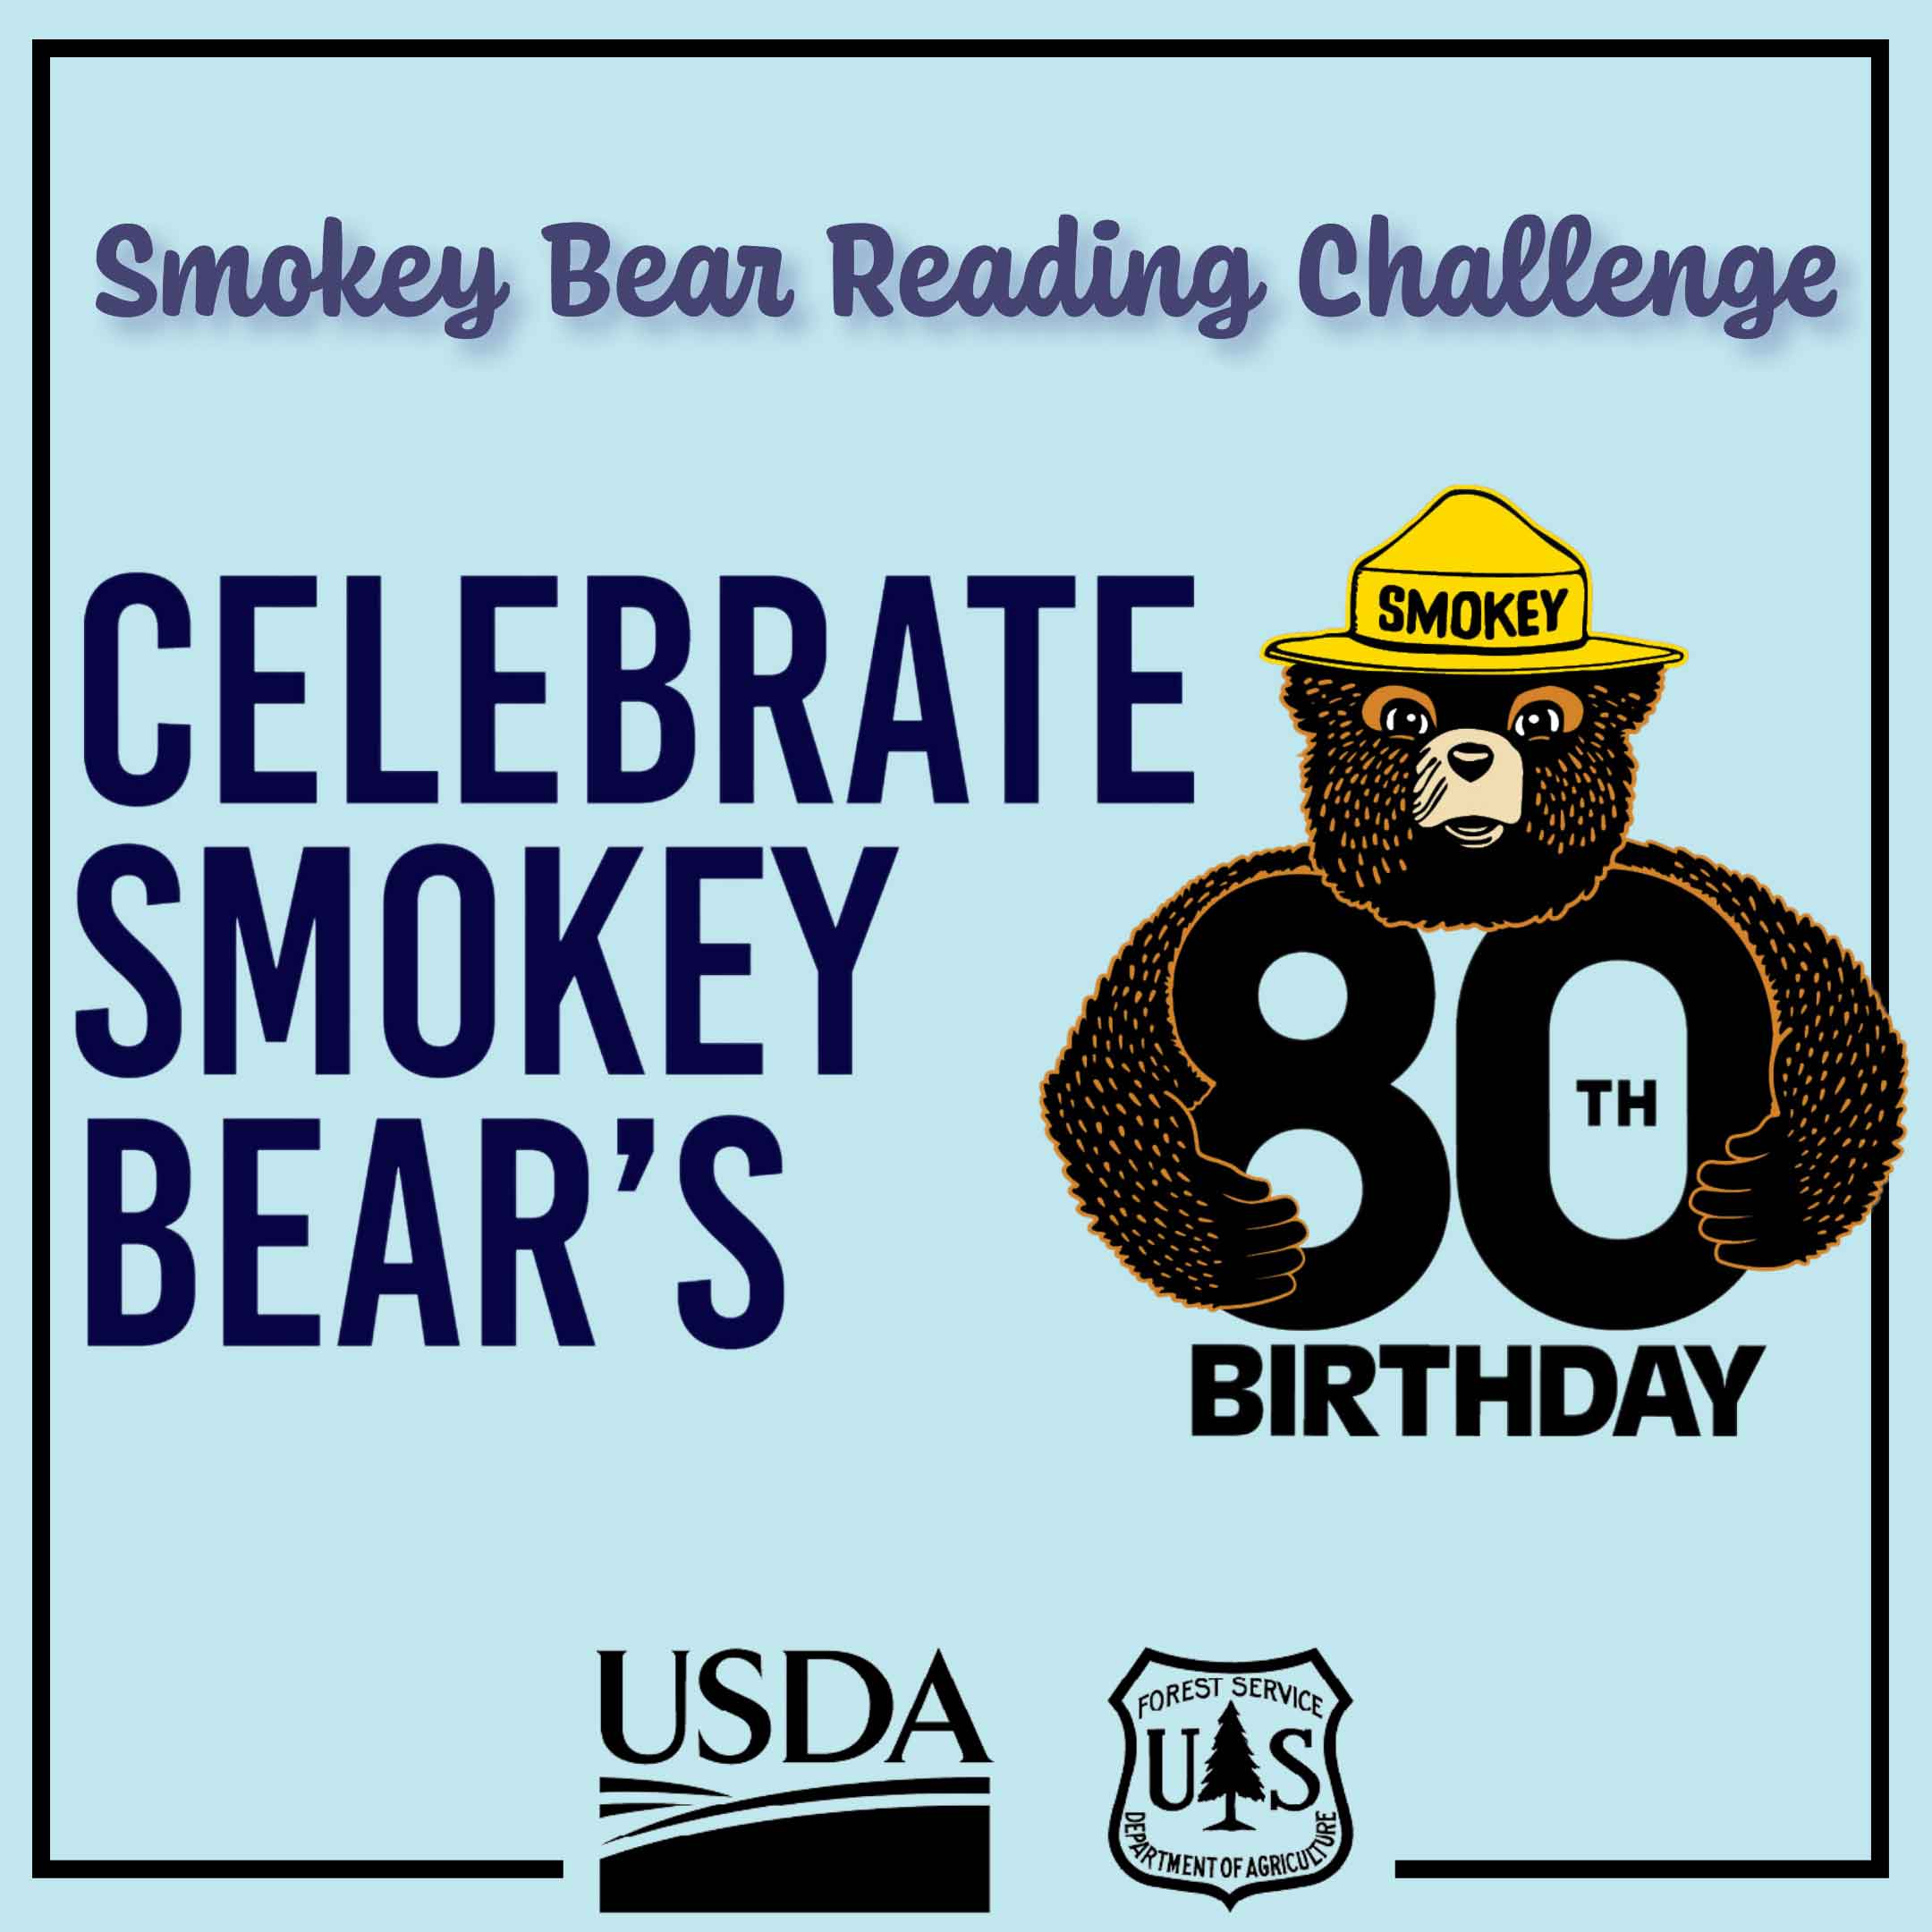 The Smokey Bear Reading Challenge helps you celebrate Smokey Bear's 80th Birthday!